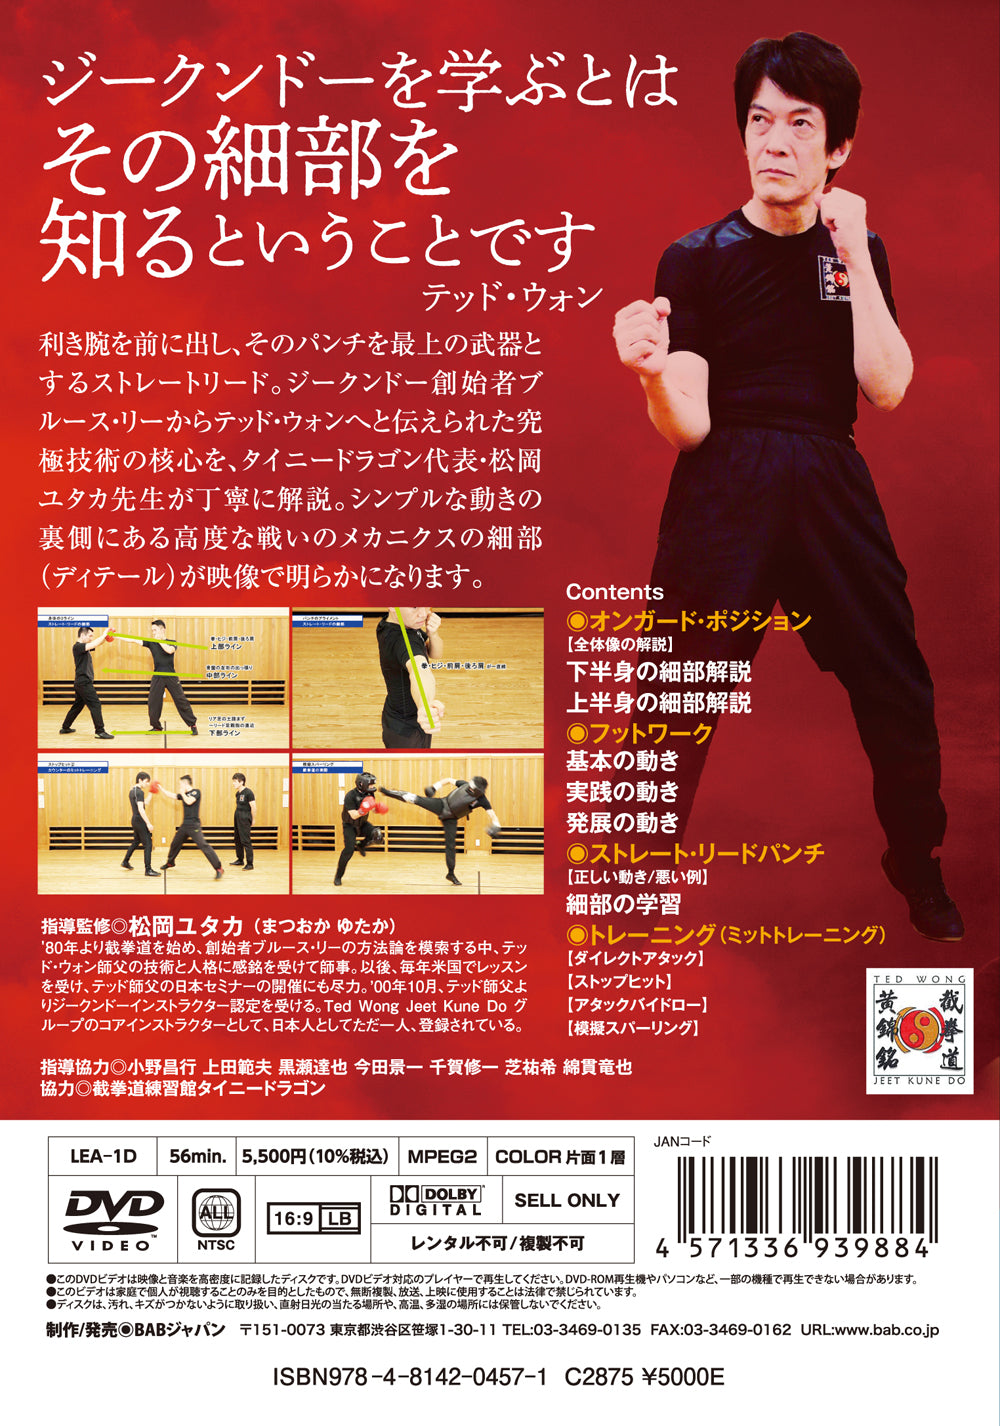 Straight Lead Punch of Jeet Kune Do DVD by Yutaka Matsuoka